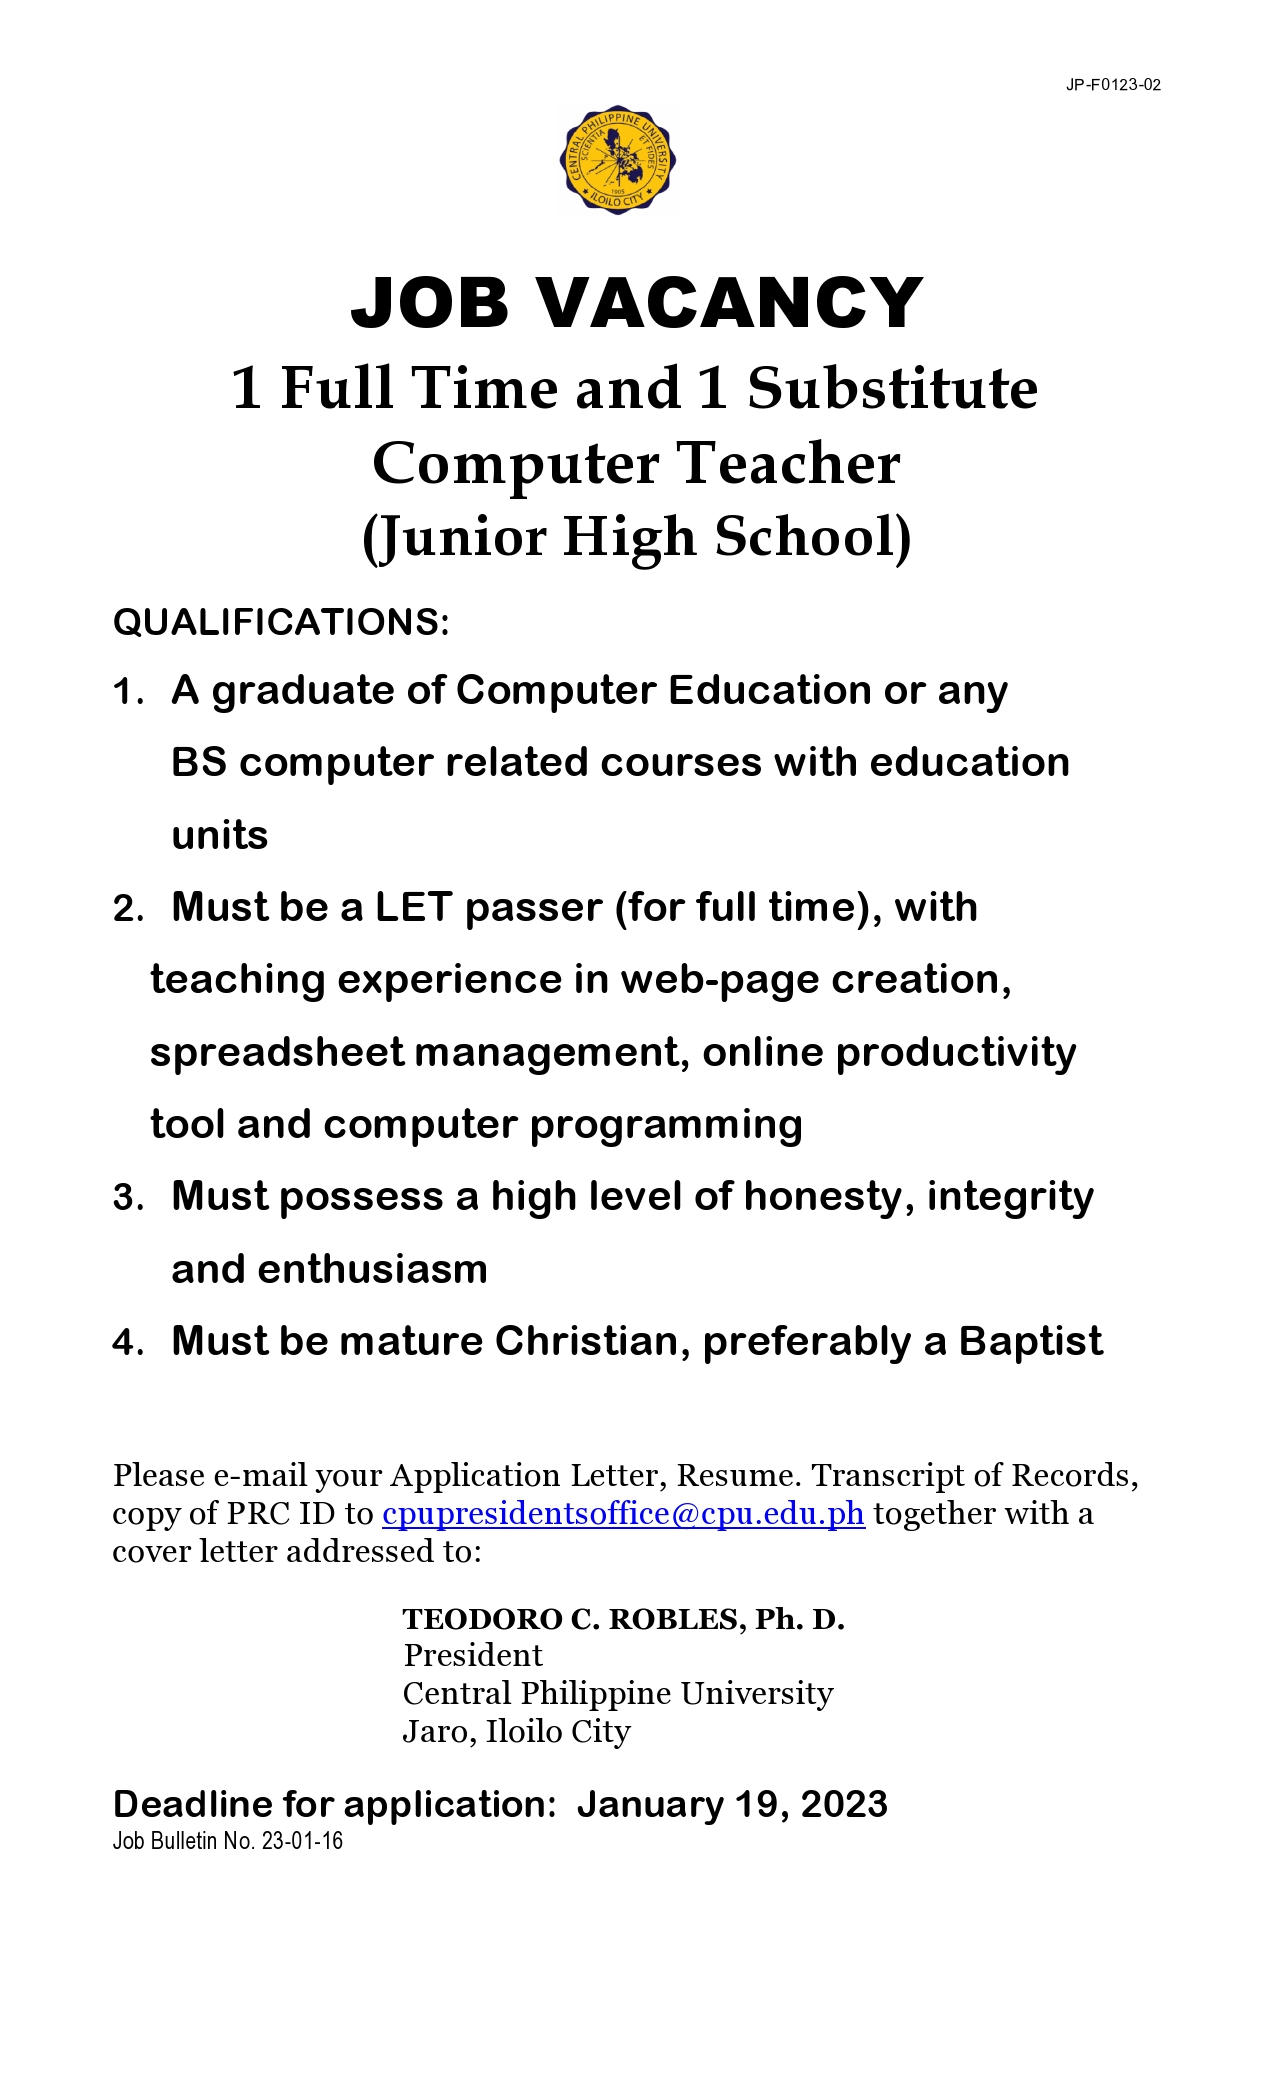 1 Full Time and 1 Substitute Computer Teacher (Junior High School)